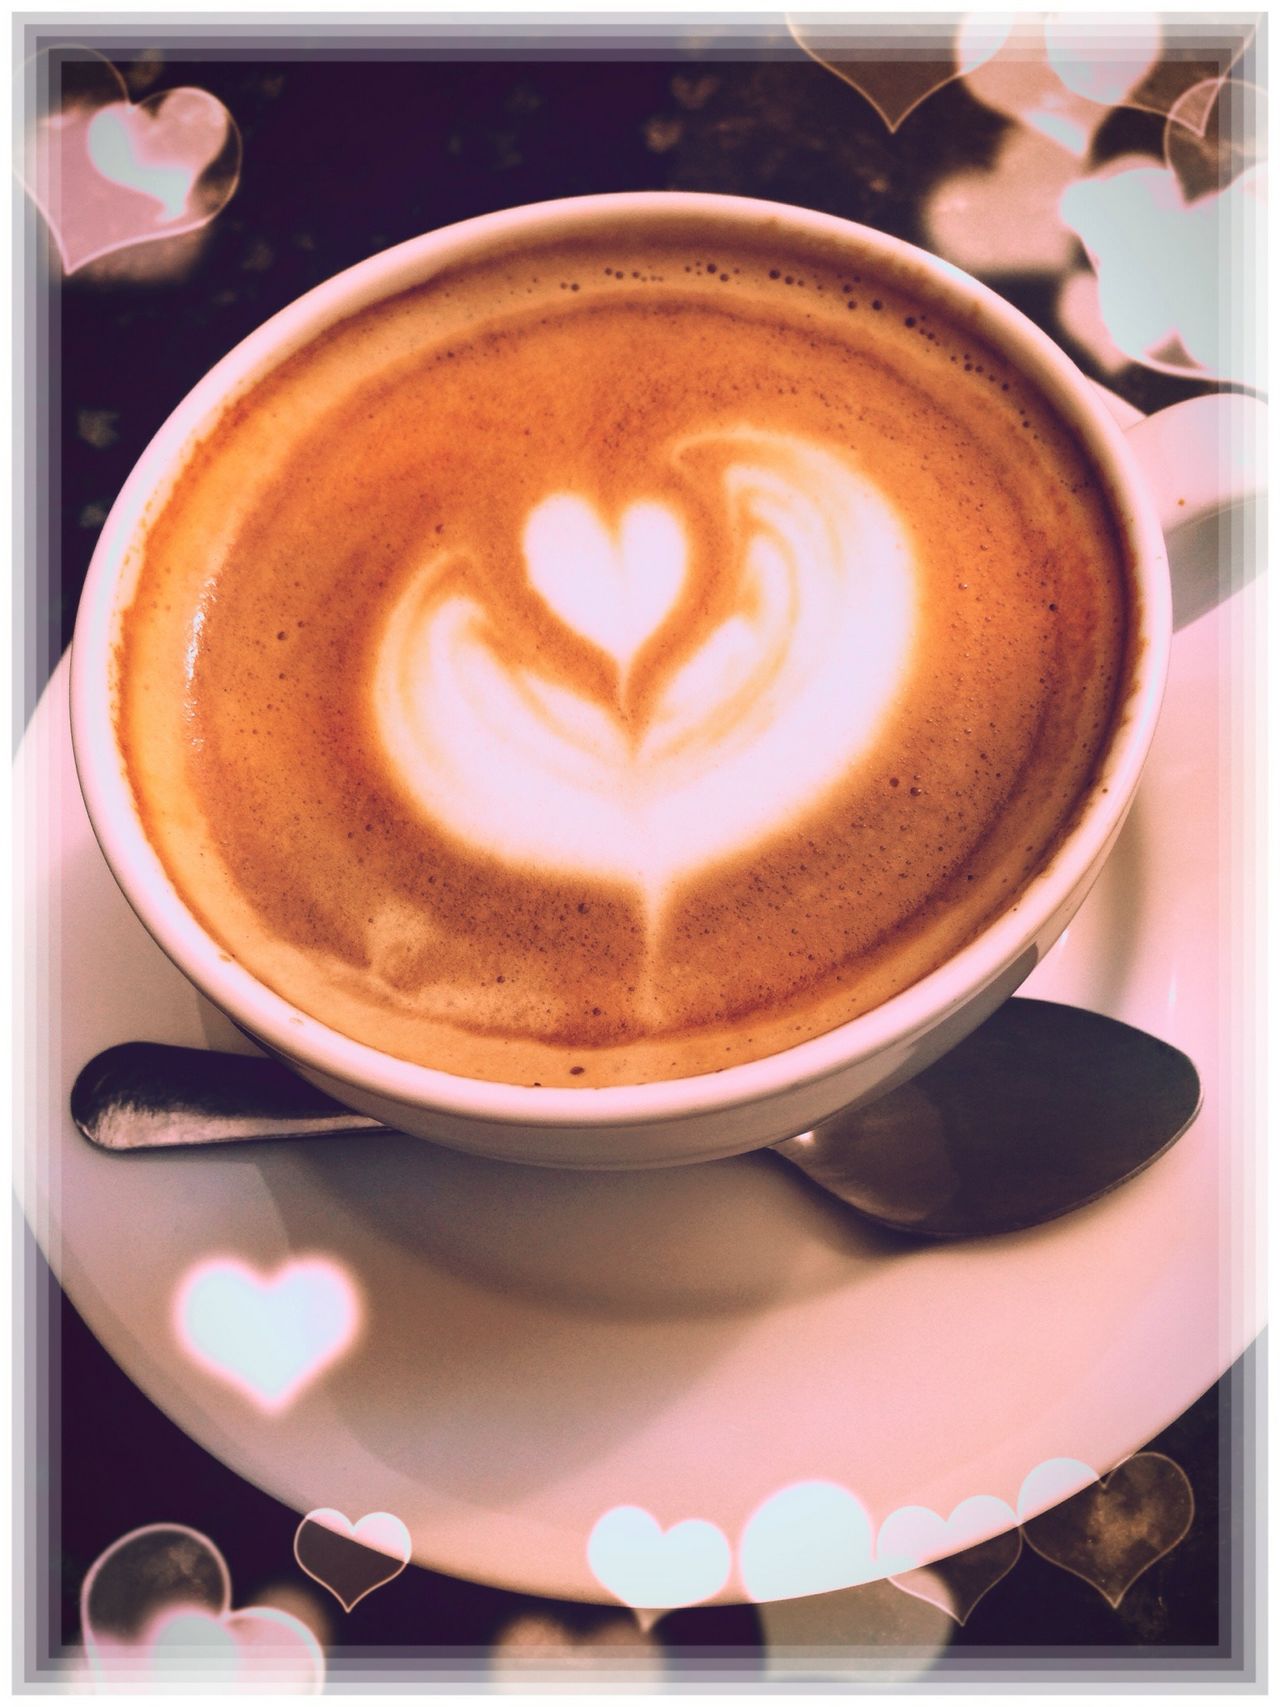 #foodart #mommycoffee #coffeeiswheretheheartis #latteBuzzed #Ilovecoffee #soulcoffee #RaKaTphoto #RaKaTgallery #foodporn